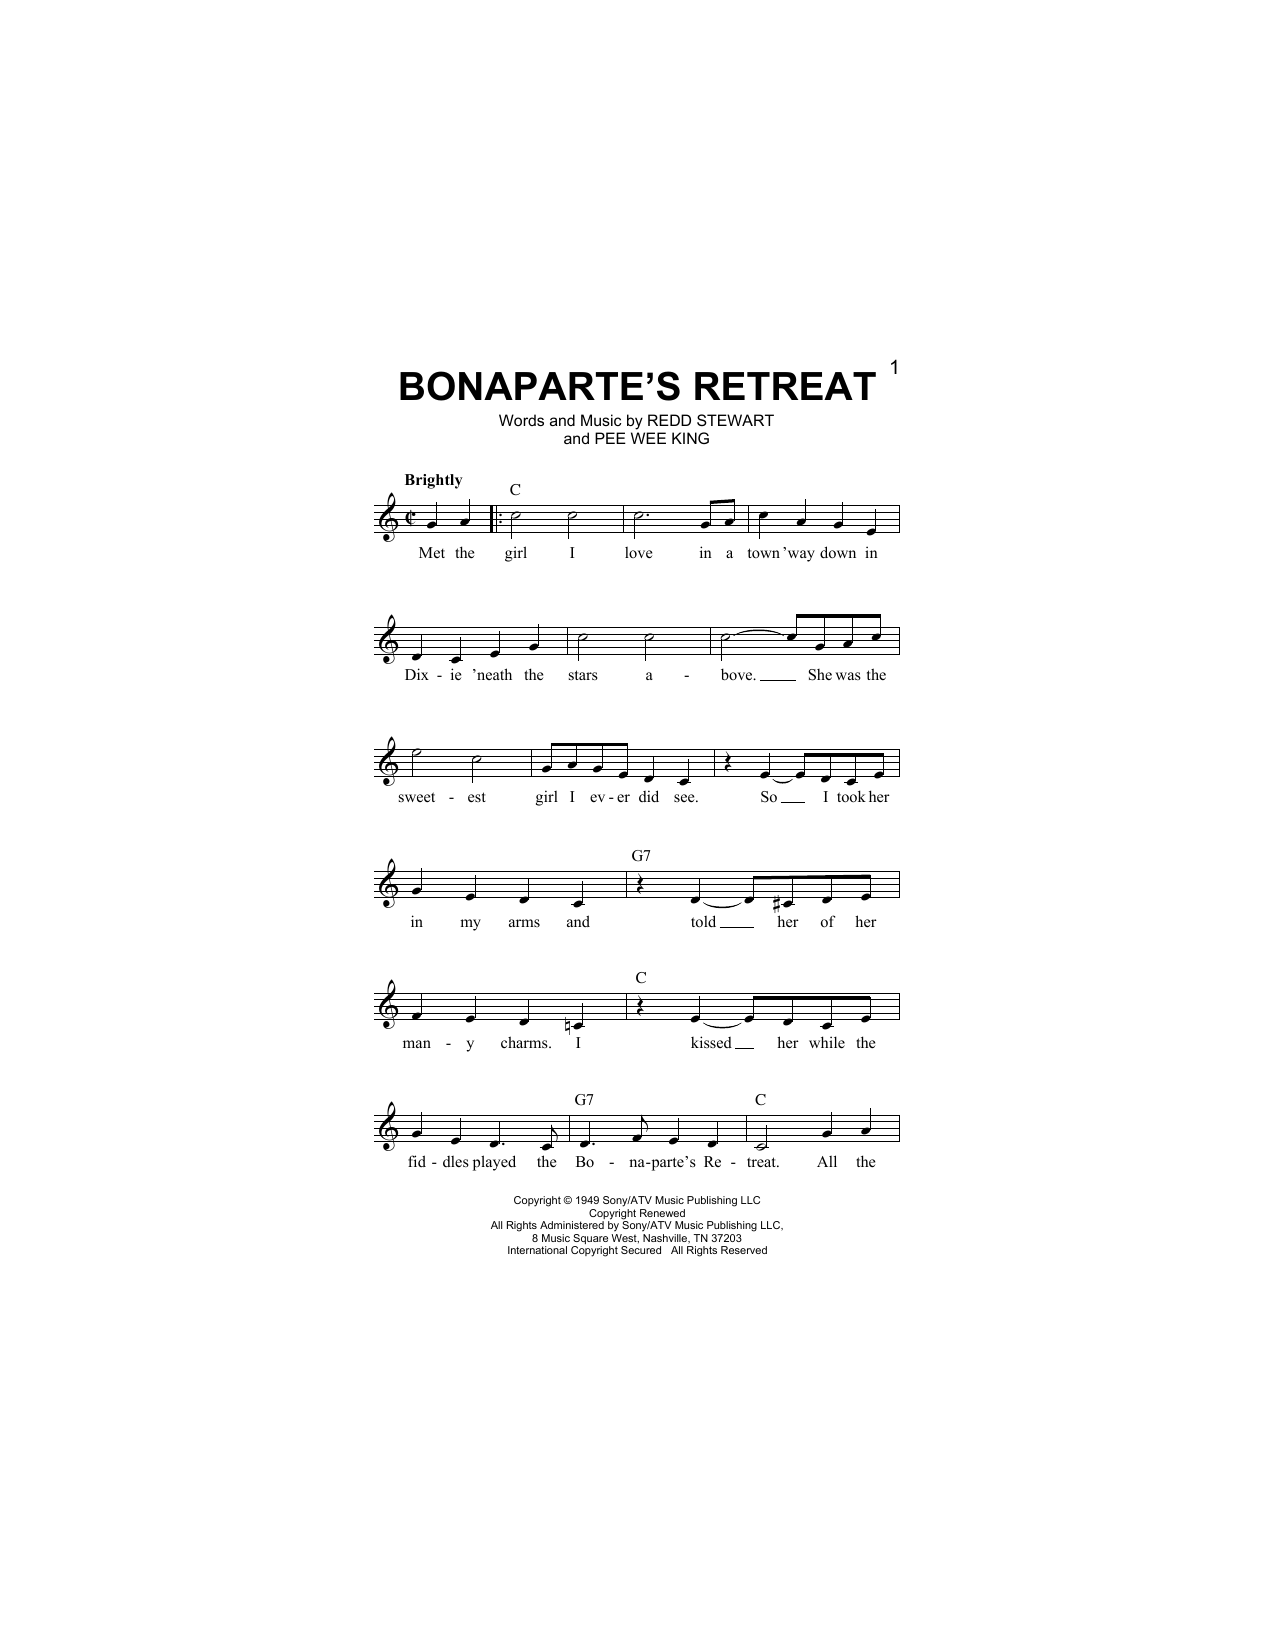 Pee Wee King Bonaparte's Retreat Sheet Music Notes & Chords for Melody Line, Lyrics & Chords - Download or Print PDF